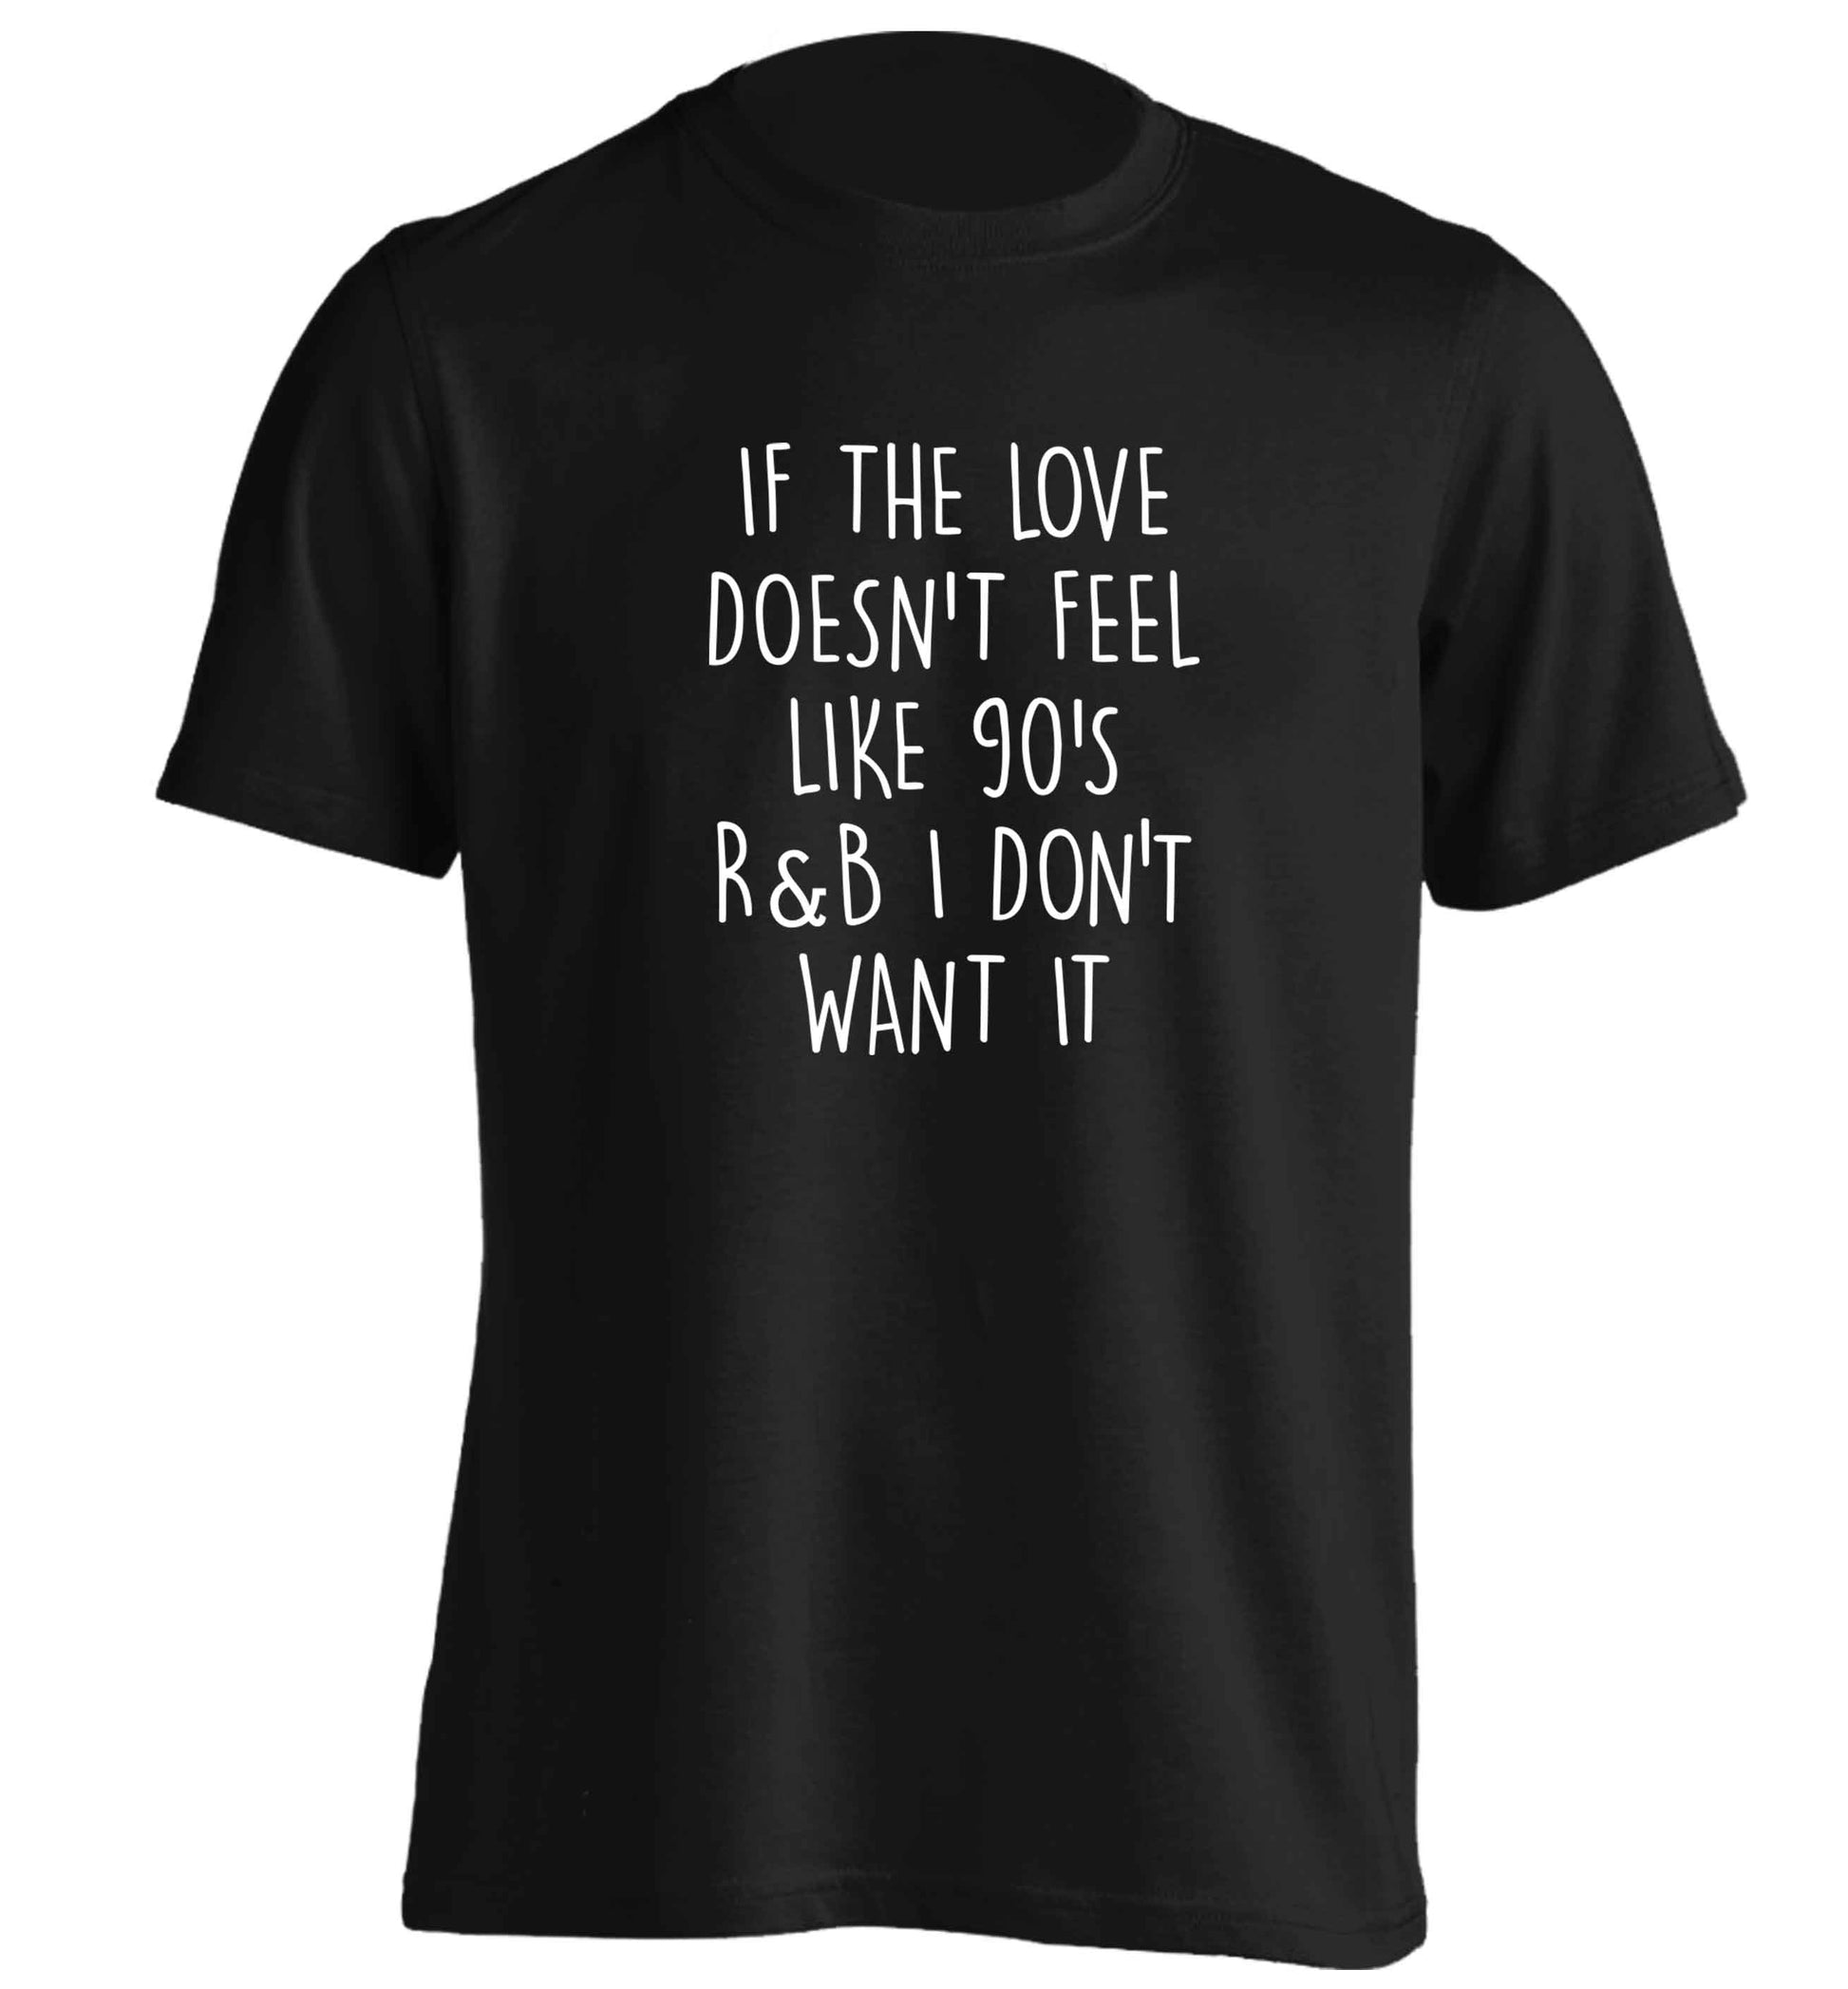 If the love doesn't feel like 90's r&b I don't want it adults unisex black Tshirt 2XL